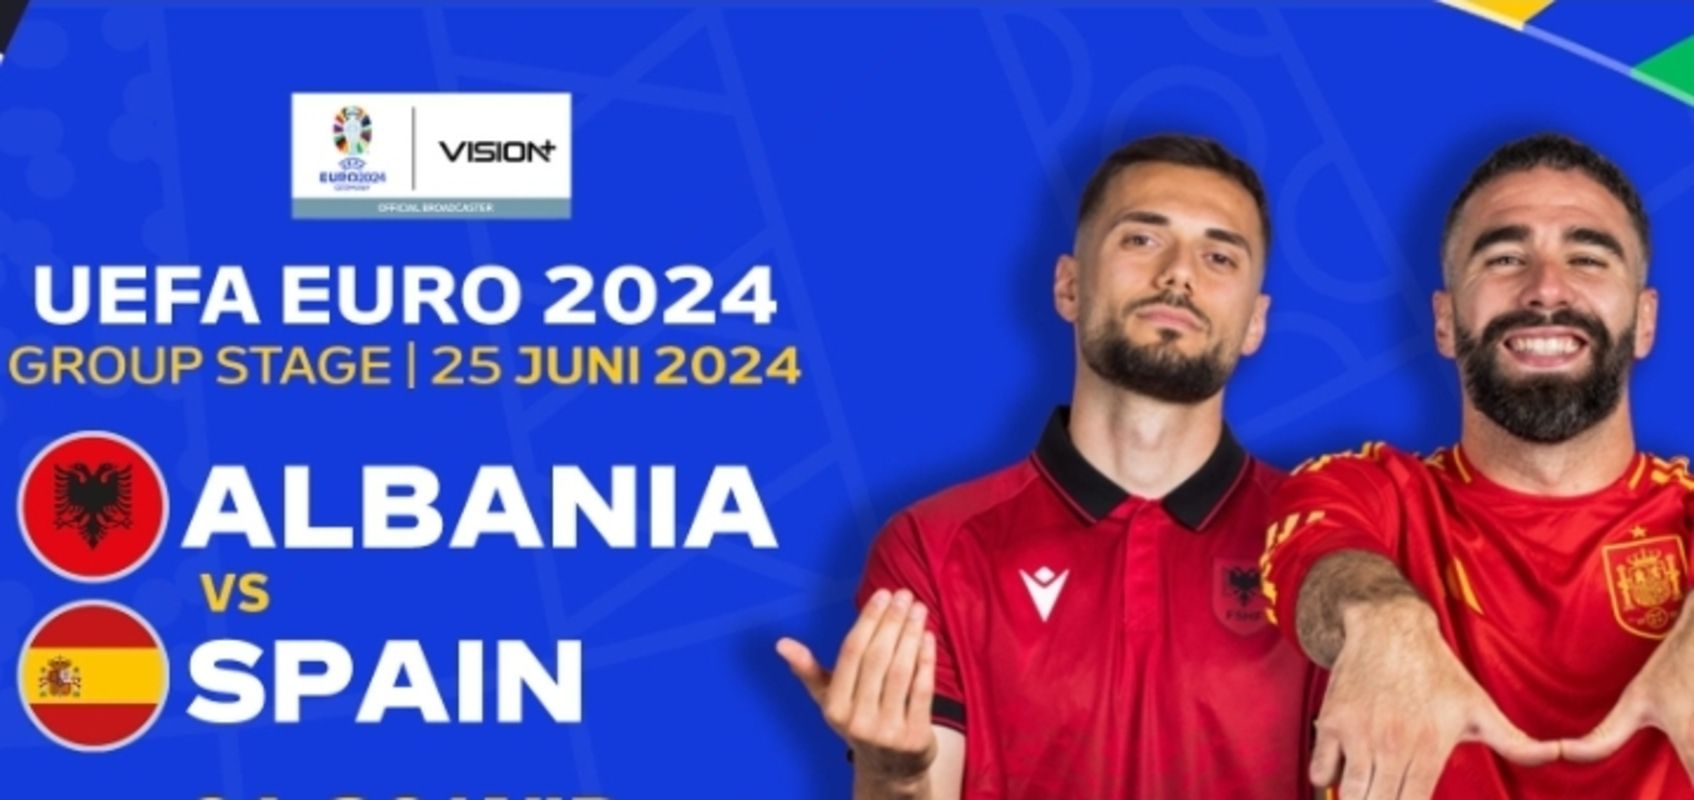 Jadwal Euro 2024 Live di TV Hari Ini: Kroasia vs Italia, Albania vs Spanyol